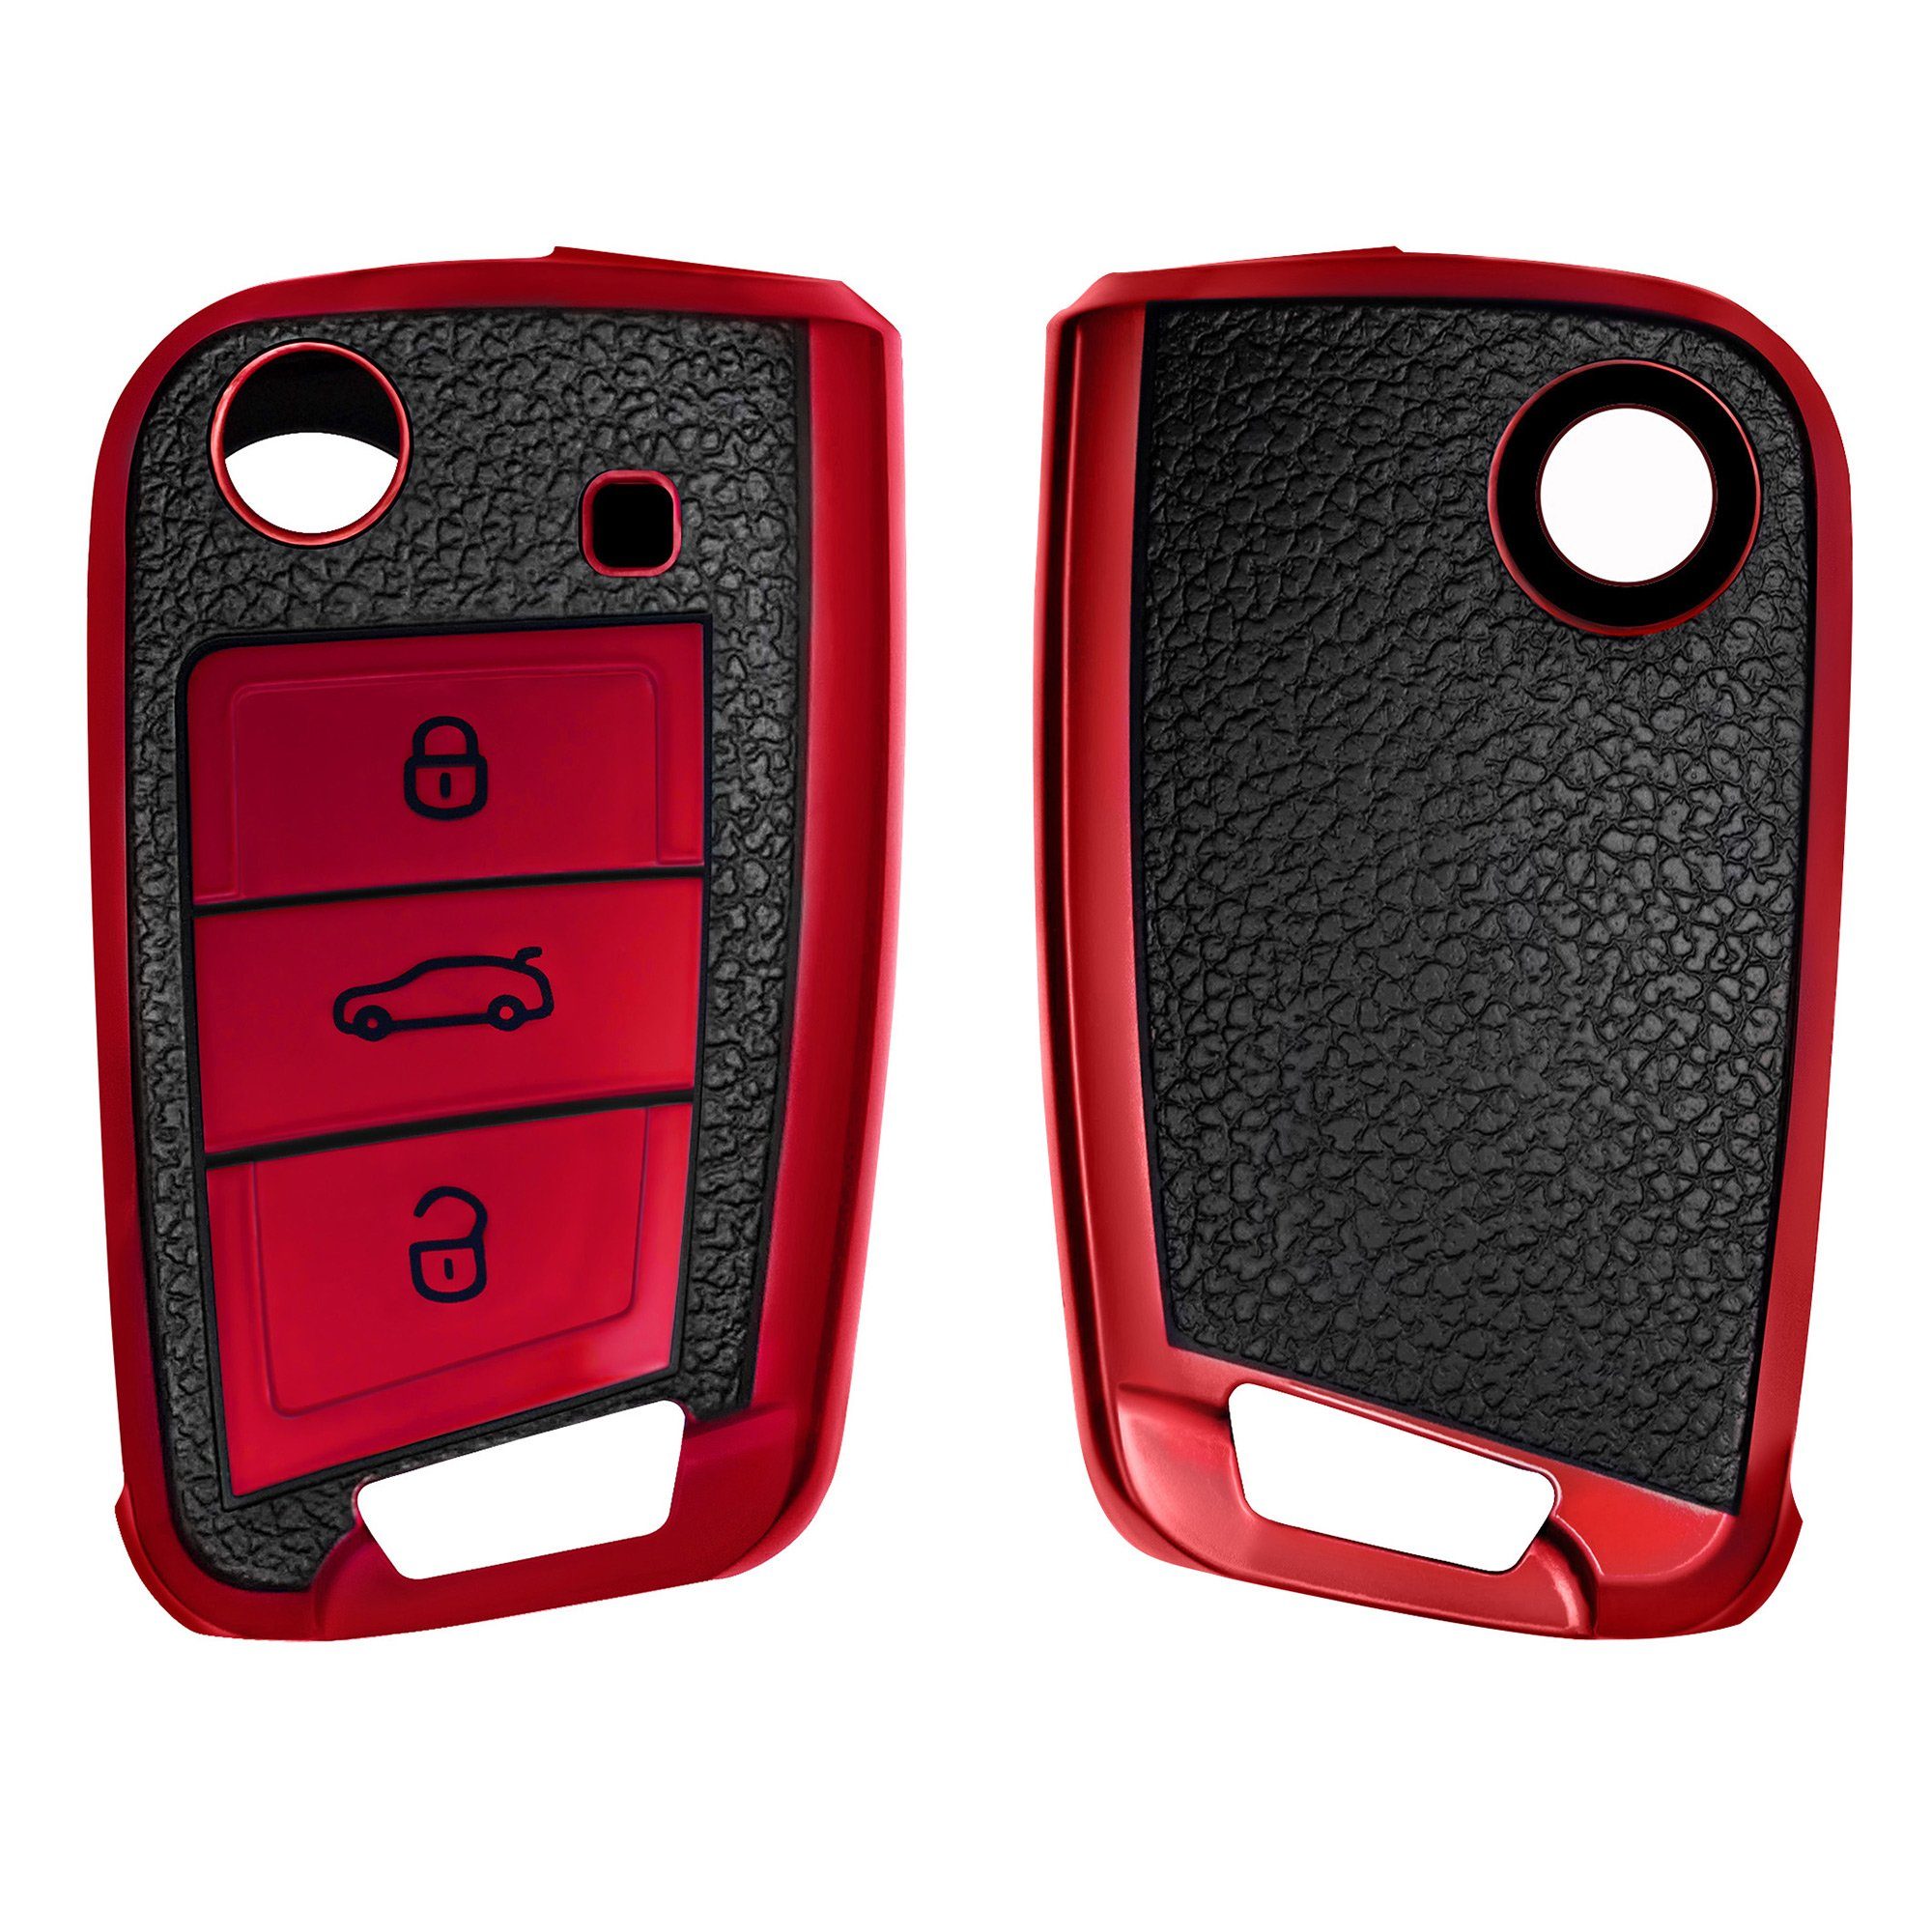 Schlüsselhülle für MK7, Cover VW Rot Golf TPU Autoschlüssel kwmobile Schutzhülle Schlüsseltasche Hülle 7